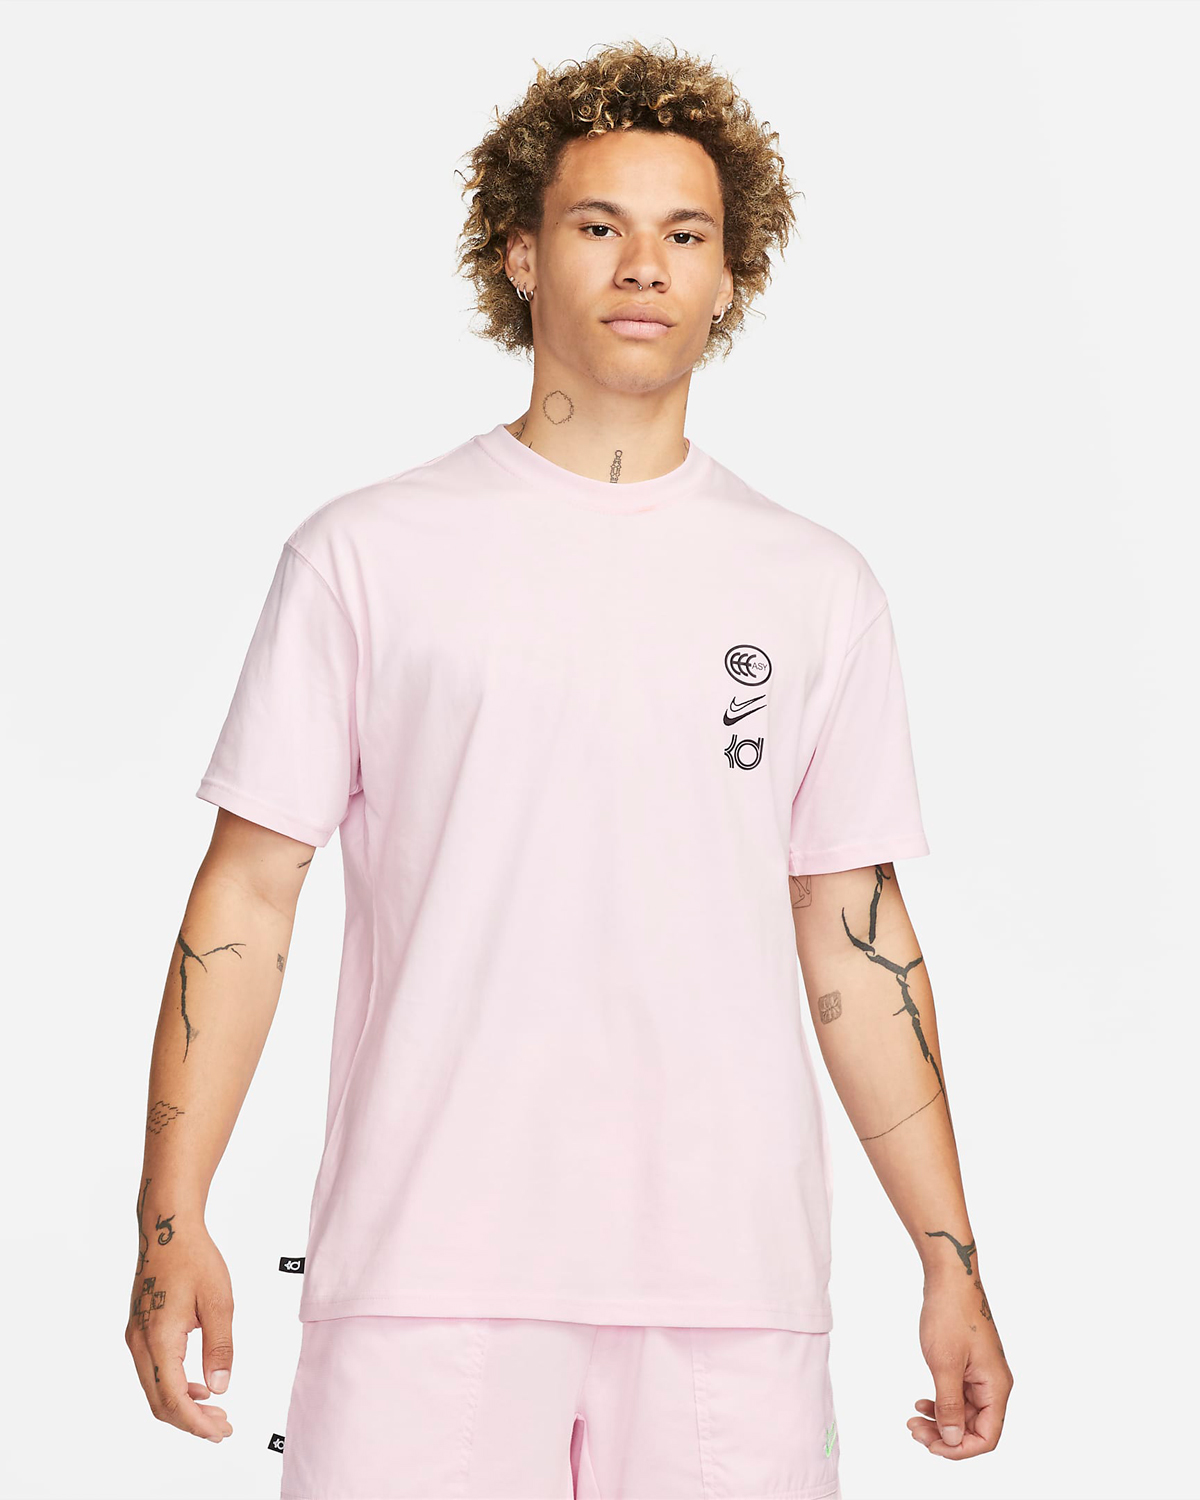 Nike-KD-Kevin-Durant-T-Shirt-Pink-Foam-1